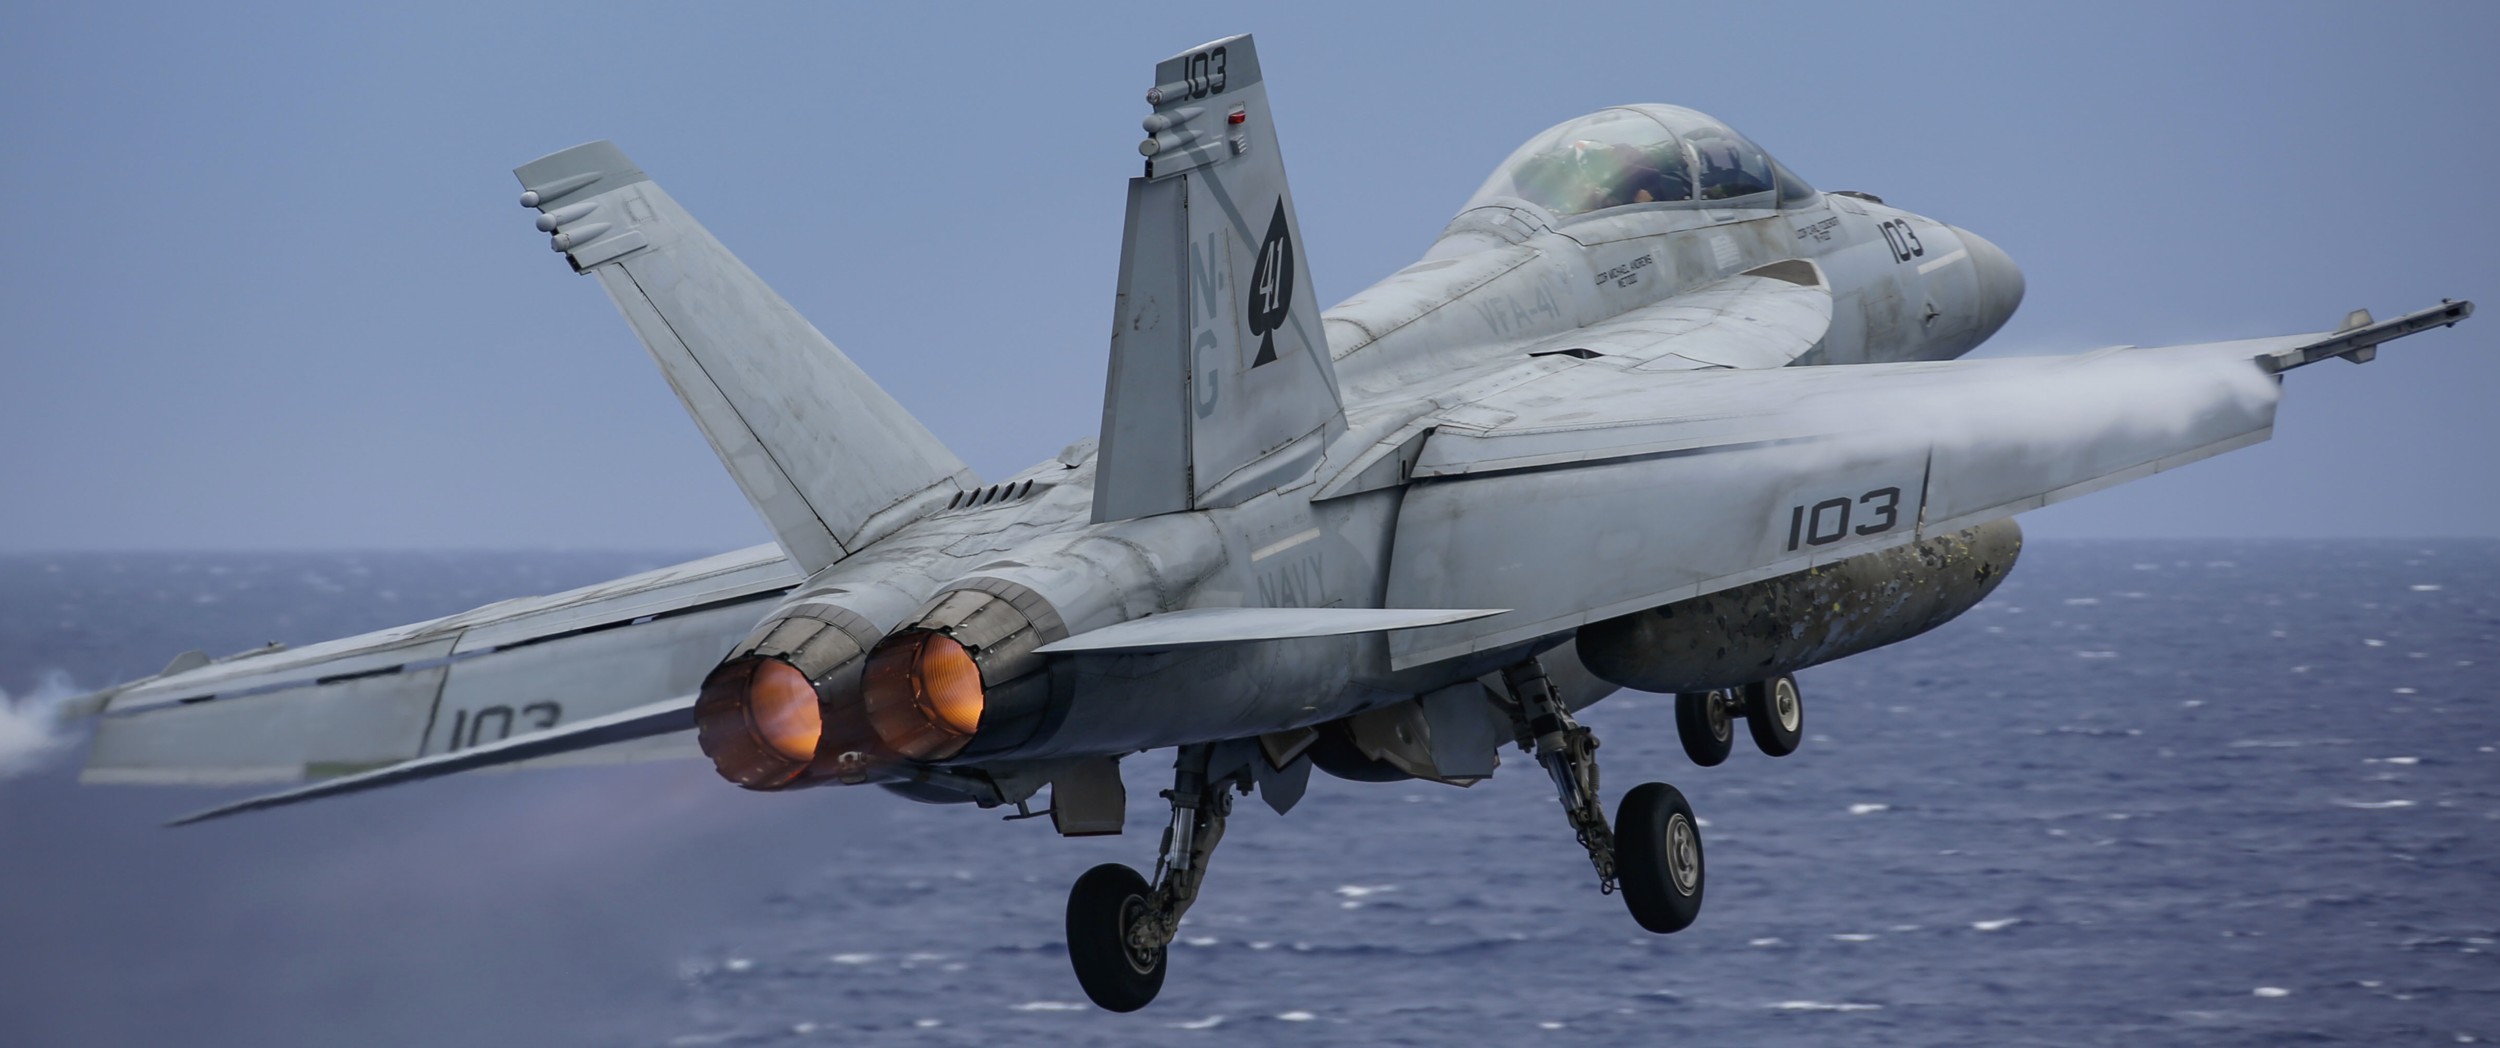 vfa-41 black aces strike fighter squadron f/a-18f super hornet cvw-9 cvn-72 uss abraham lincoln us navy 101